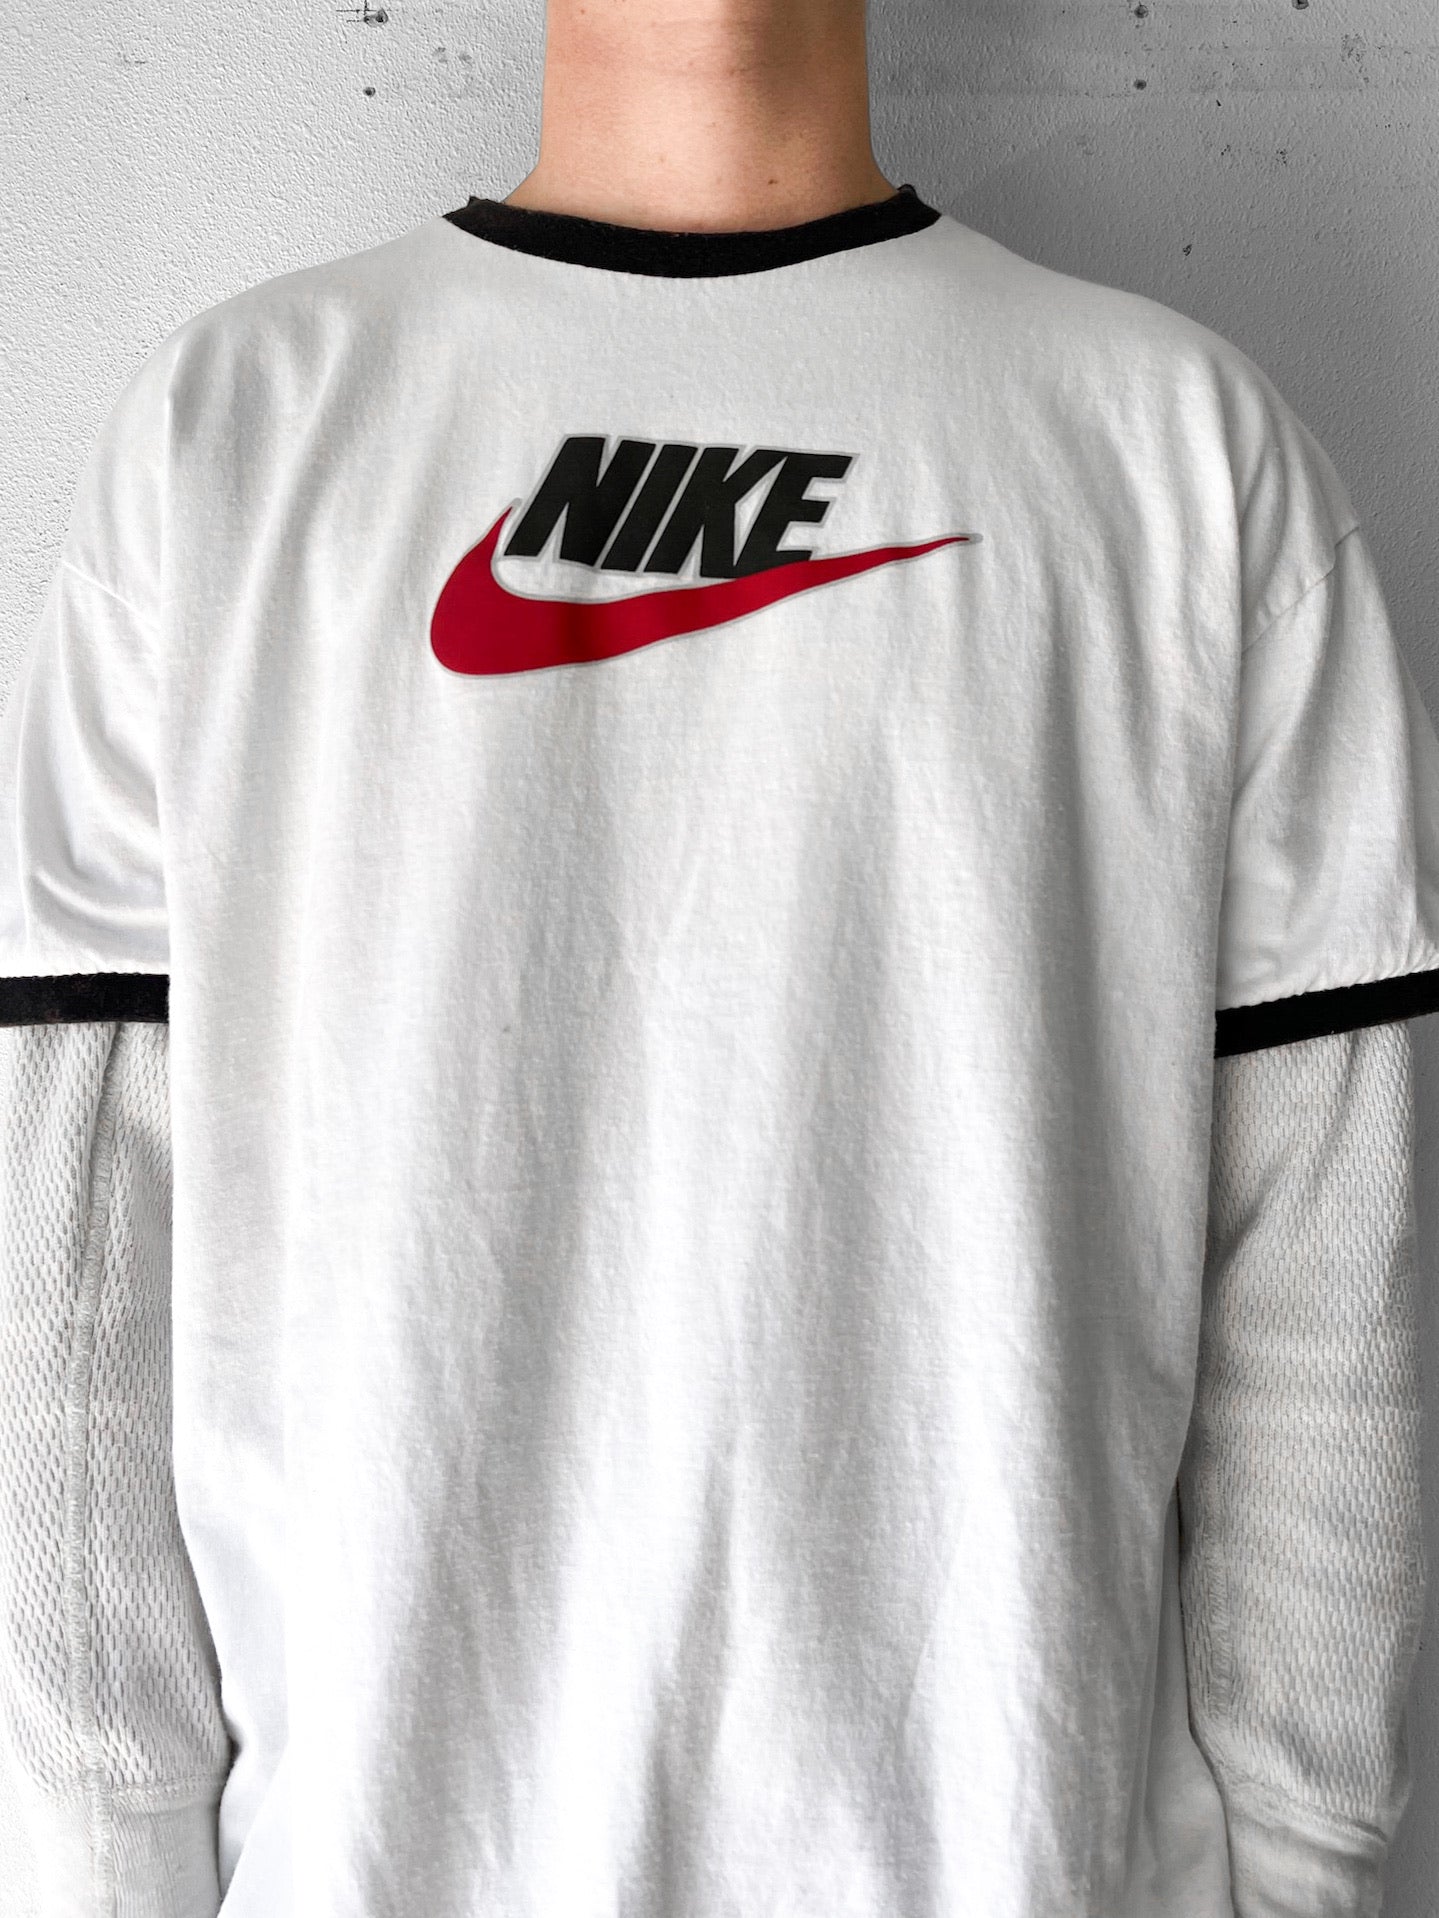 Nike Swoosh Ringer Shirt - XL